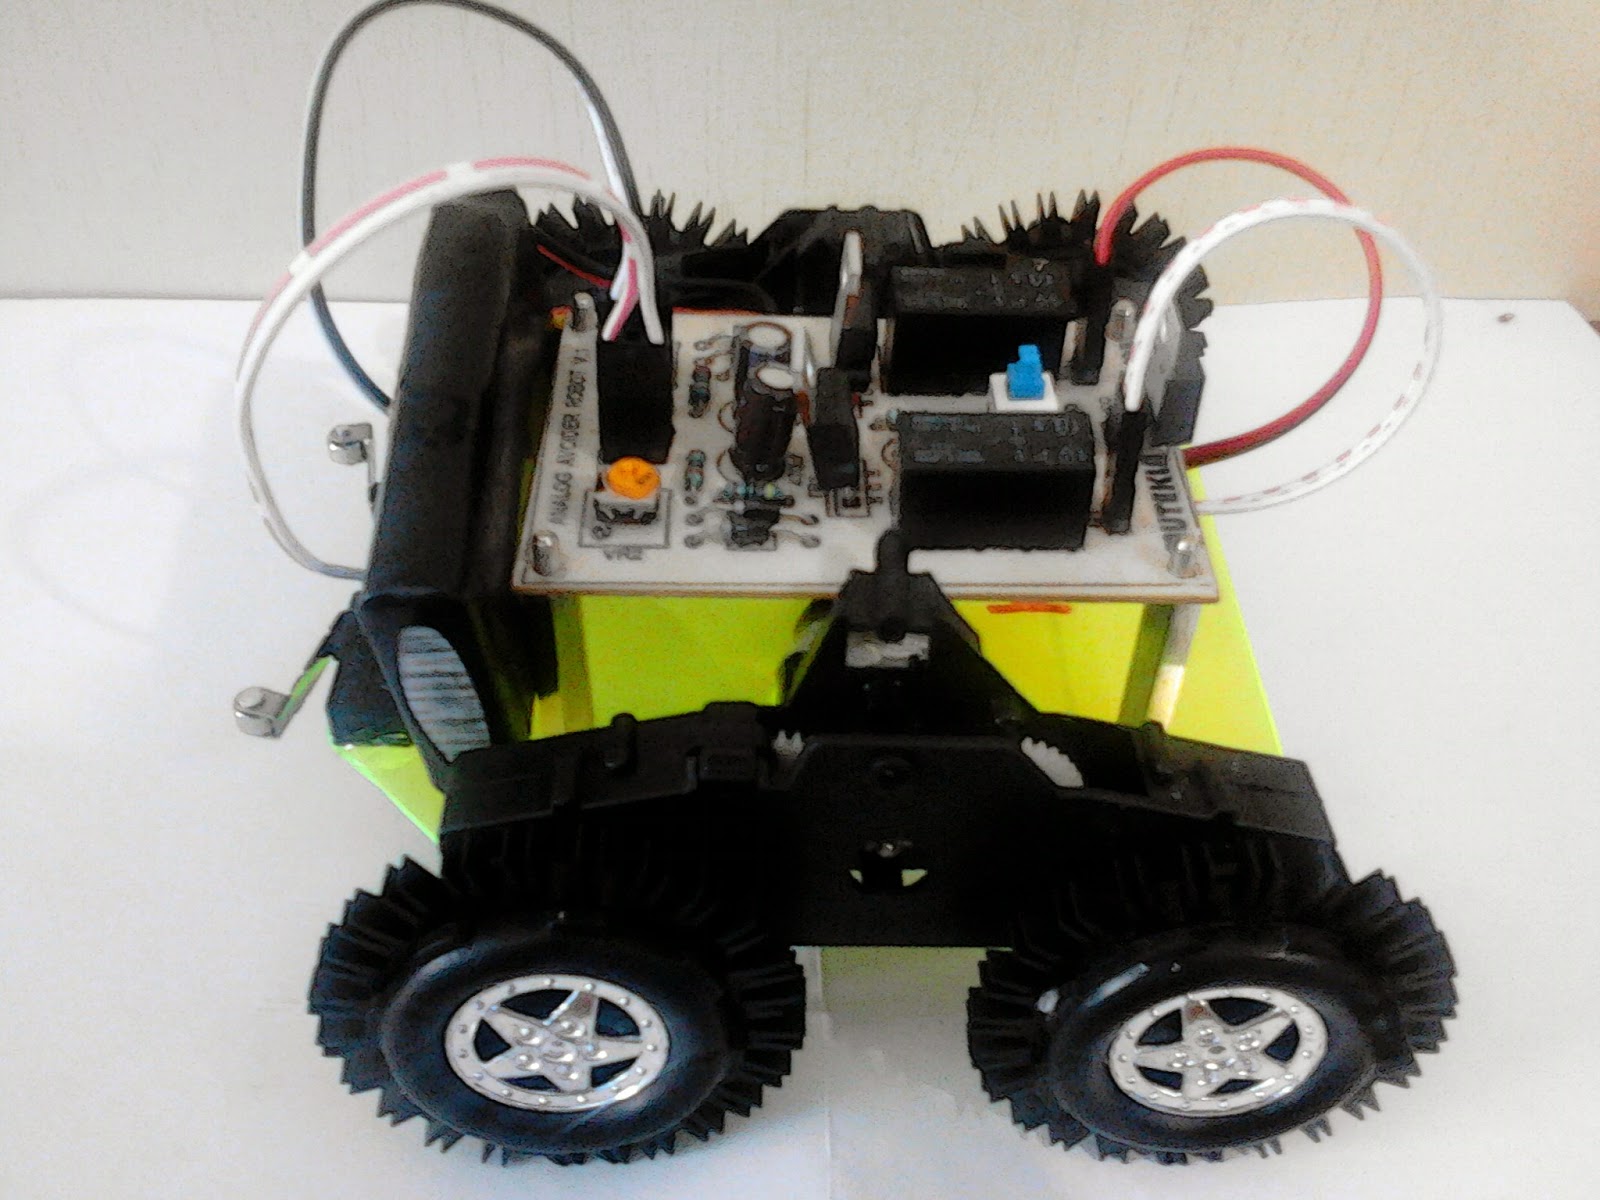 Membuat Robot Sederhana dari Barang Bekas – Les Privat Surabaya